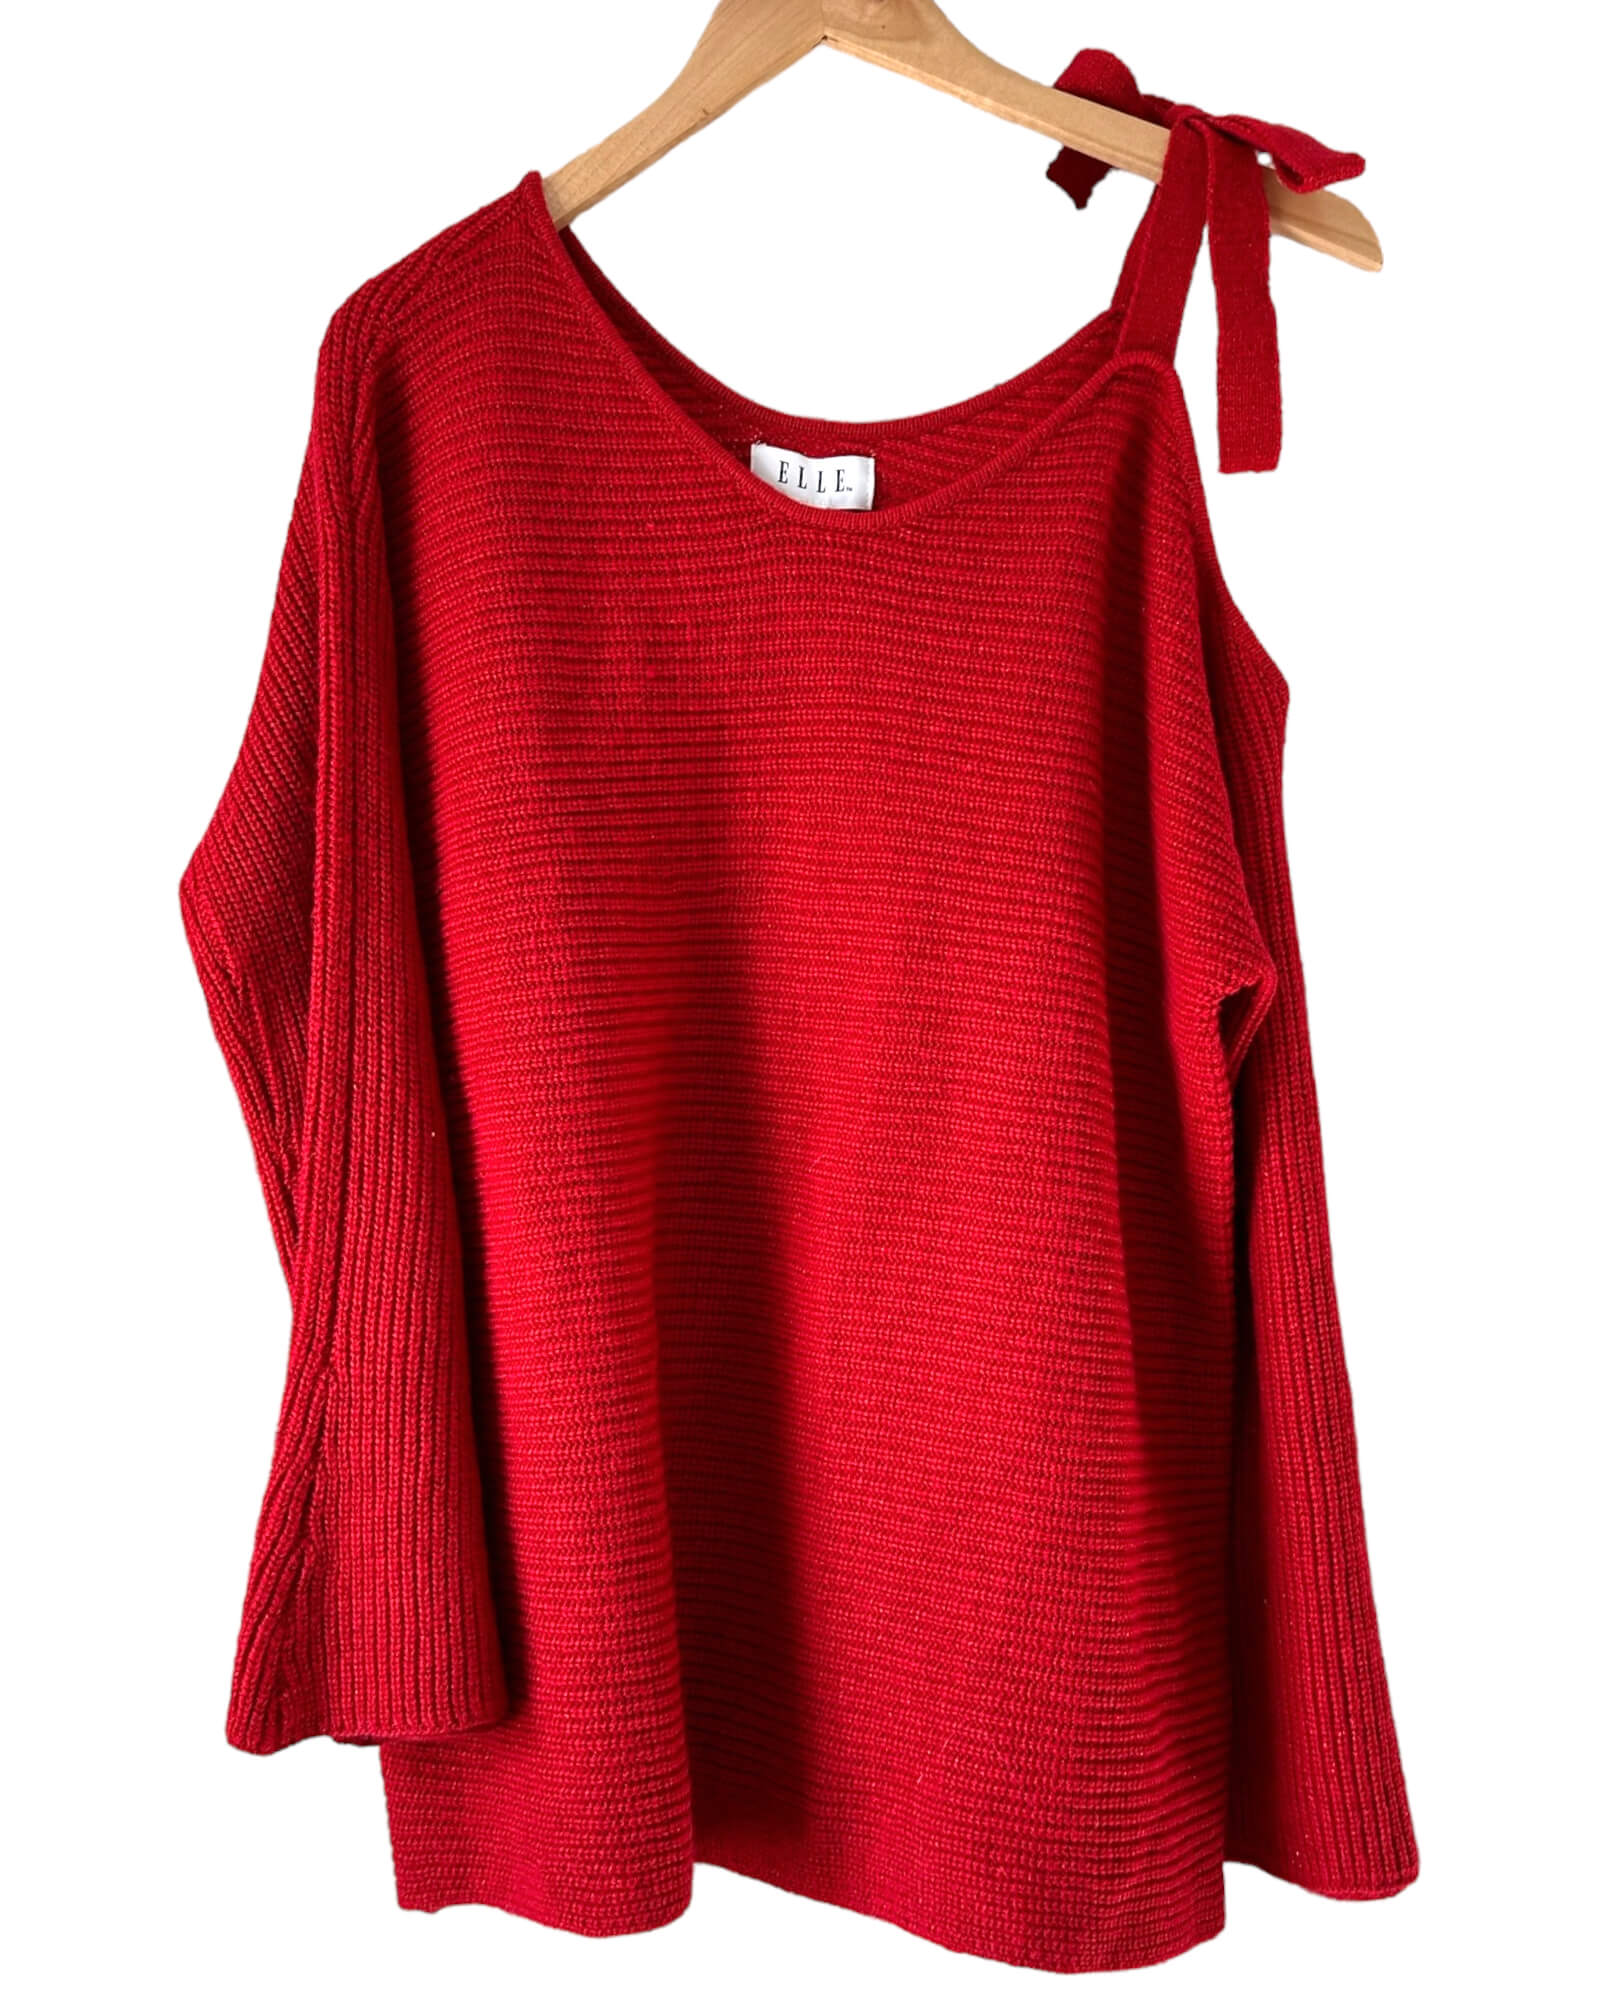 Cool Winter ELLE cherry red metallic off-shoulder sweater